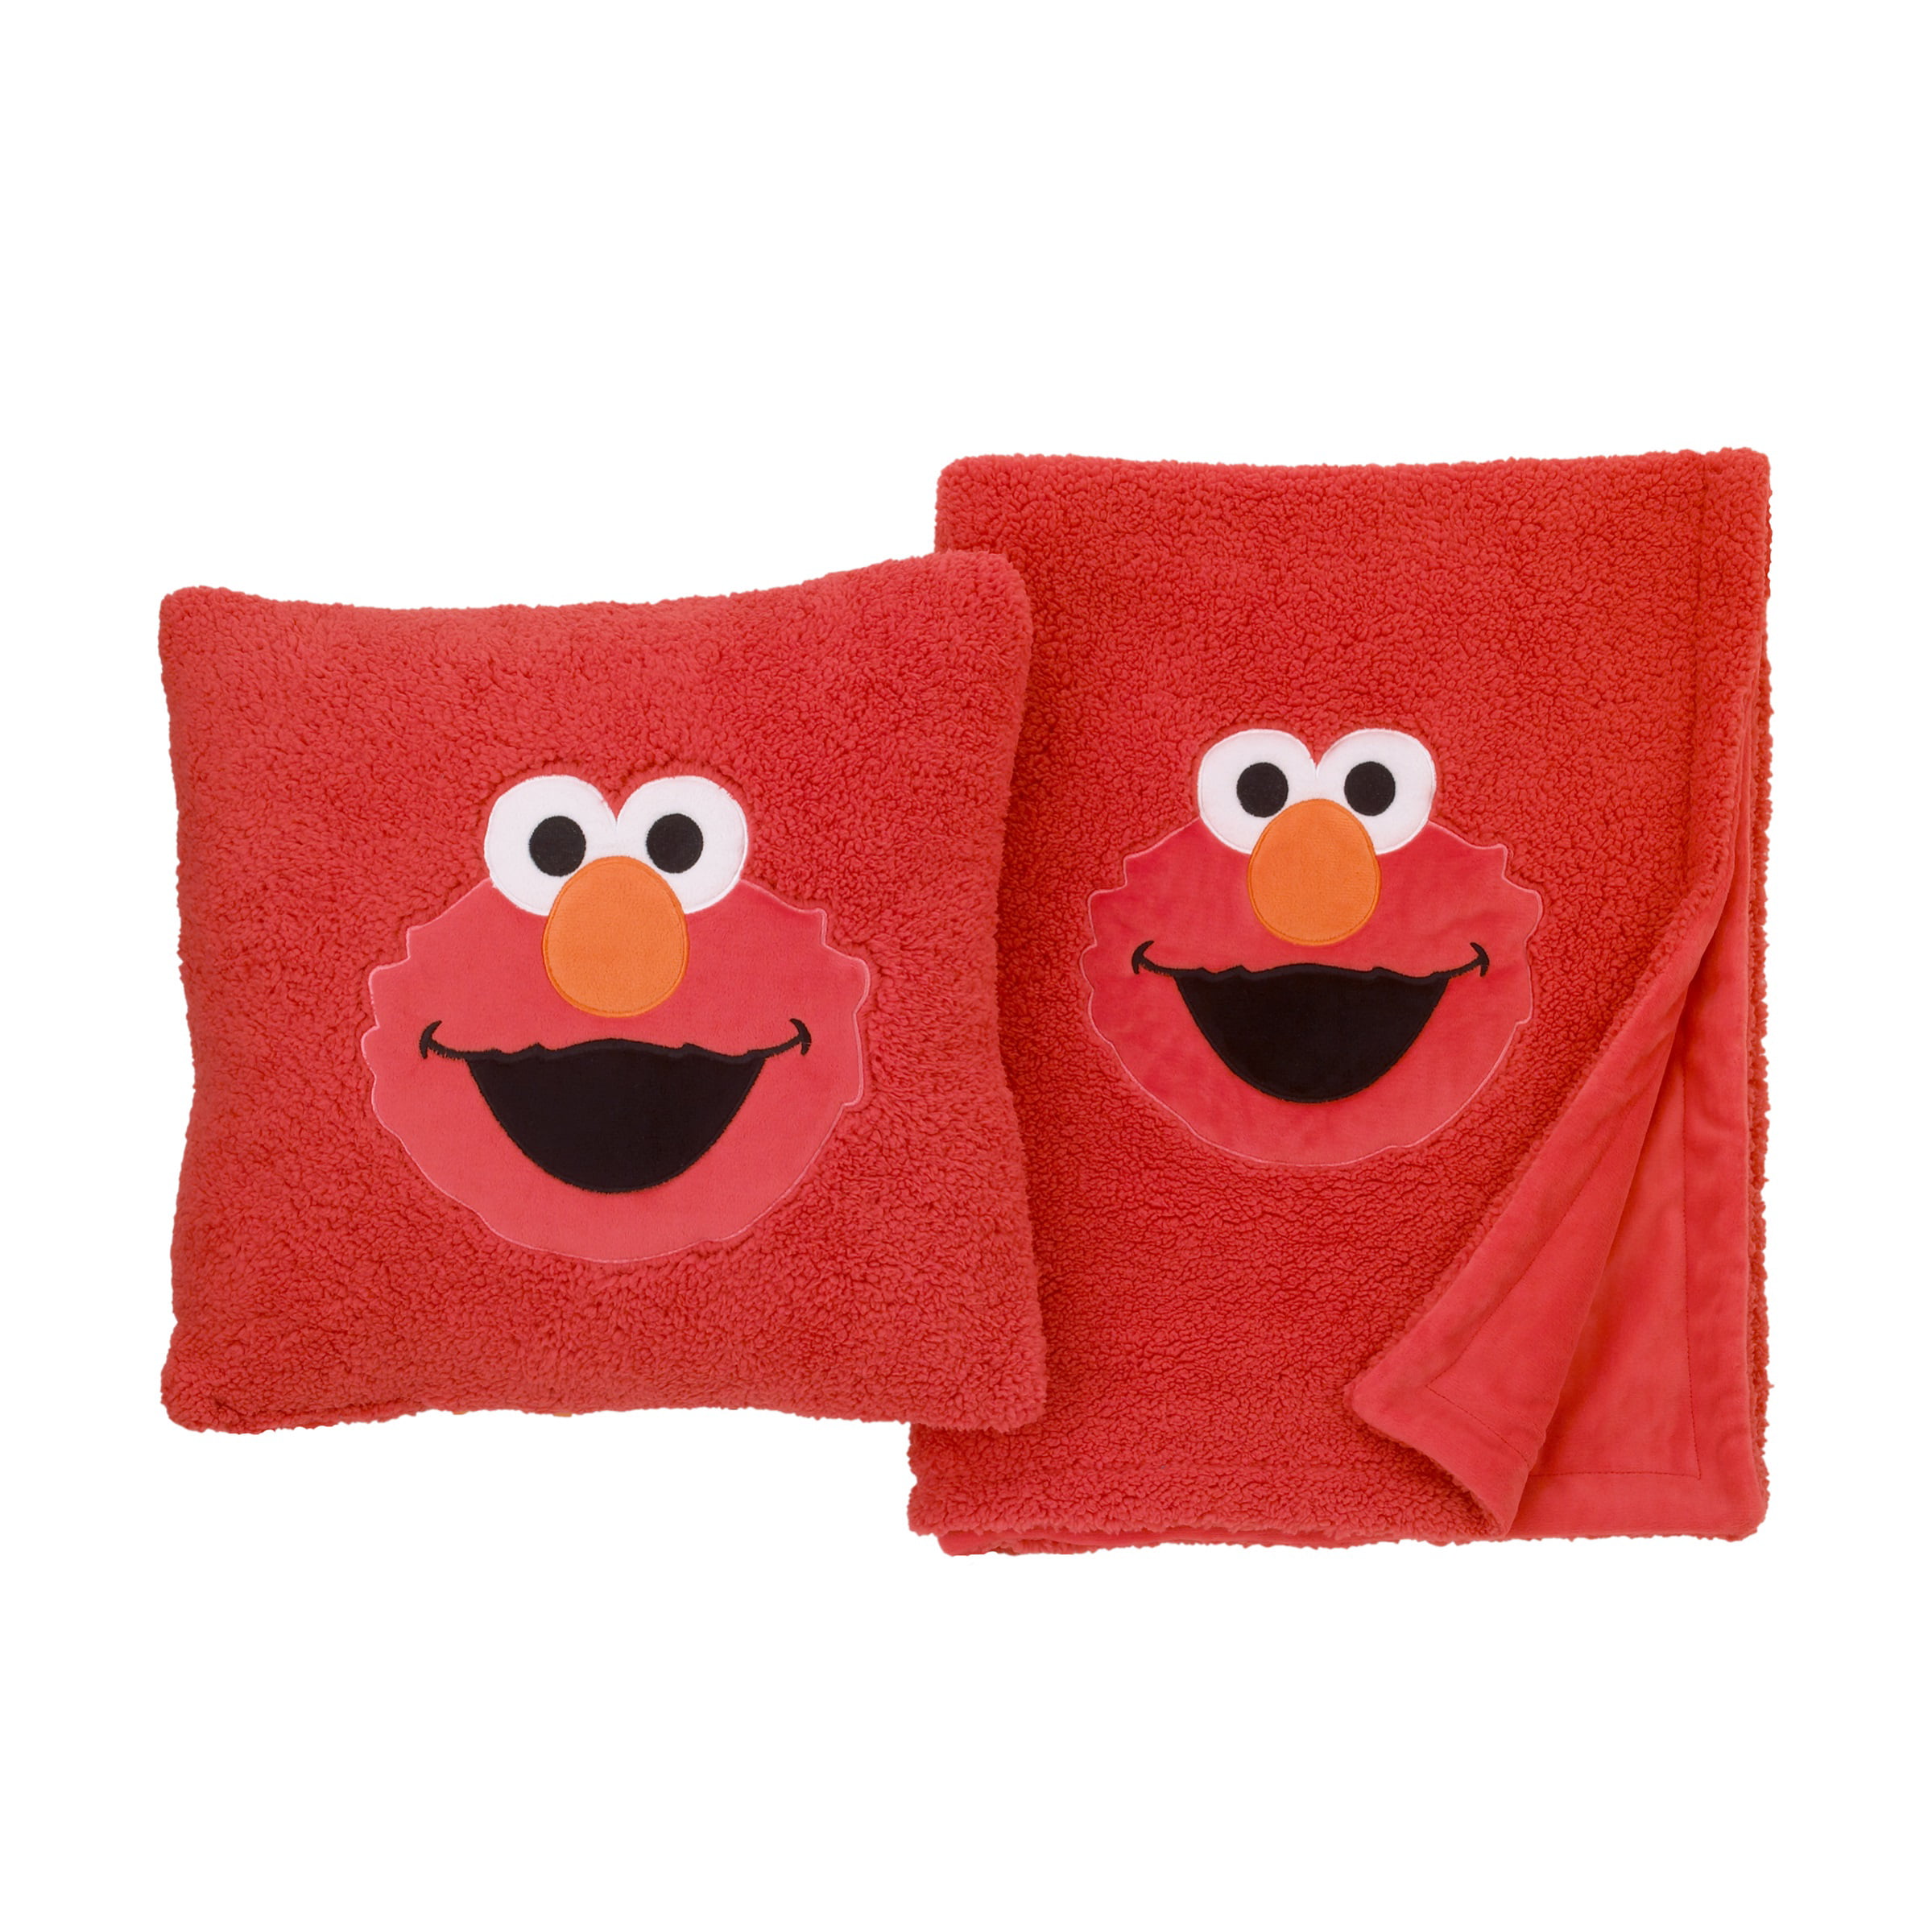 Sesame Street Elmo Soft Throw Blanket Pillow Plush Figure Red 